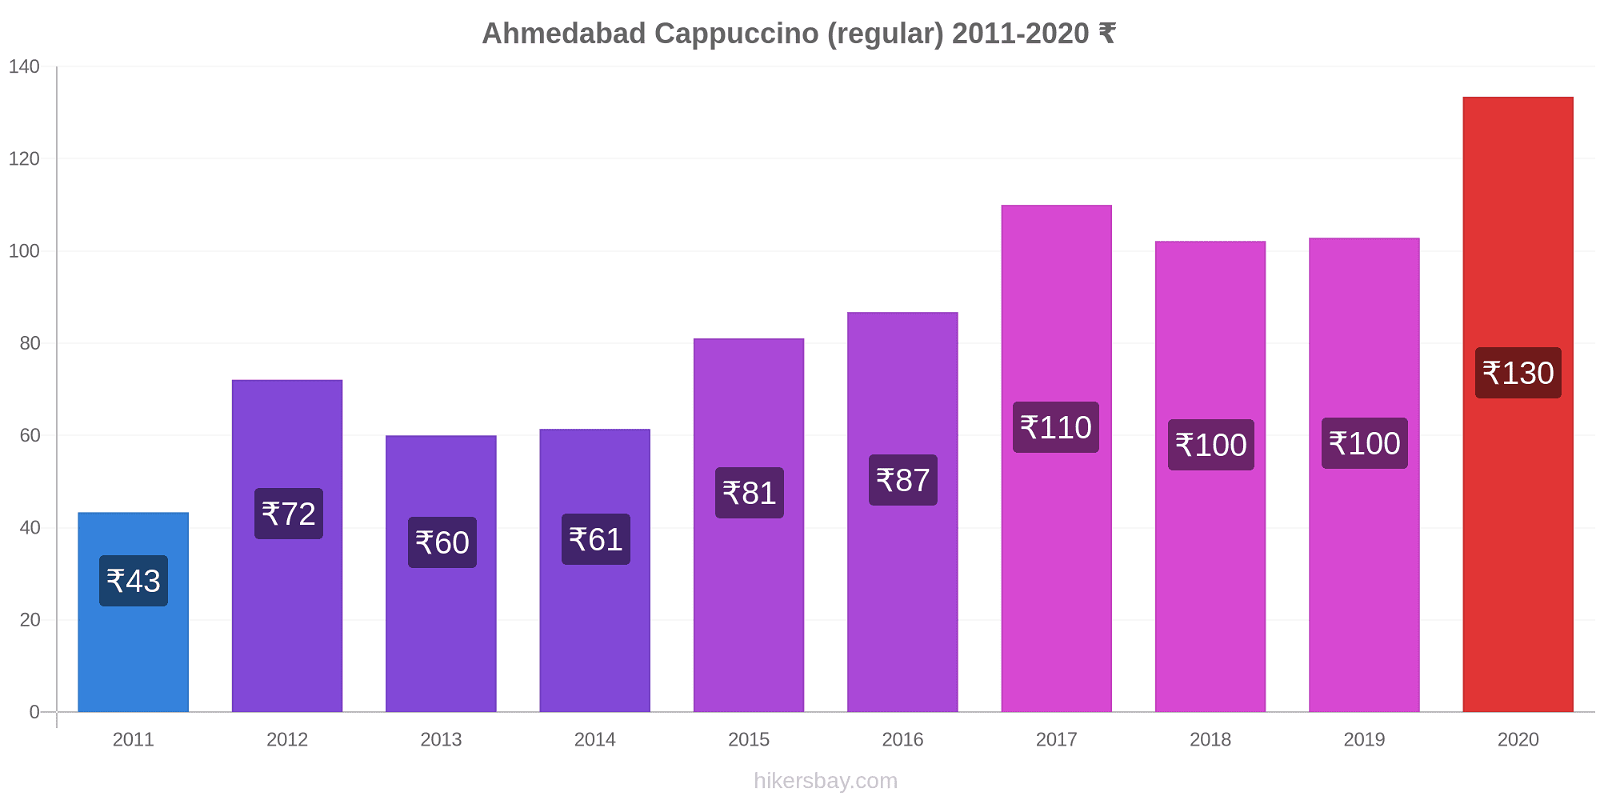 Ahmedabad price changes Cappuccino (regular) hikersbay.com